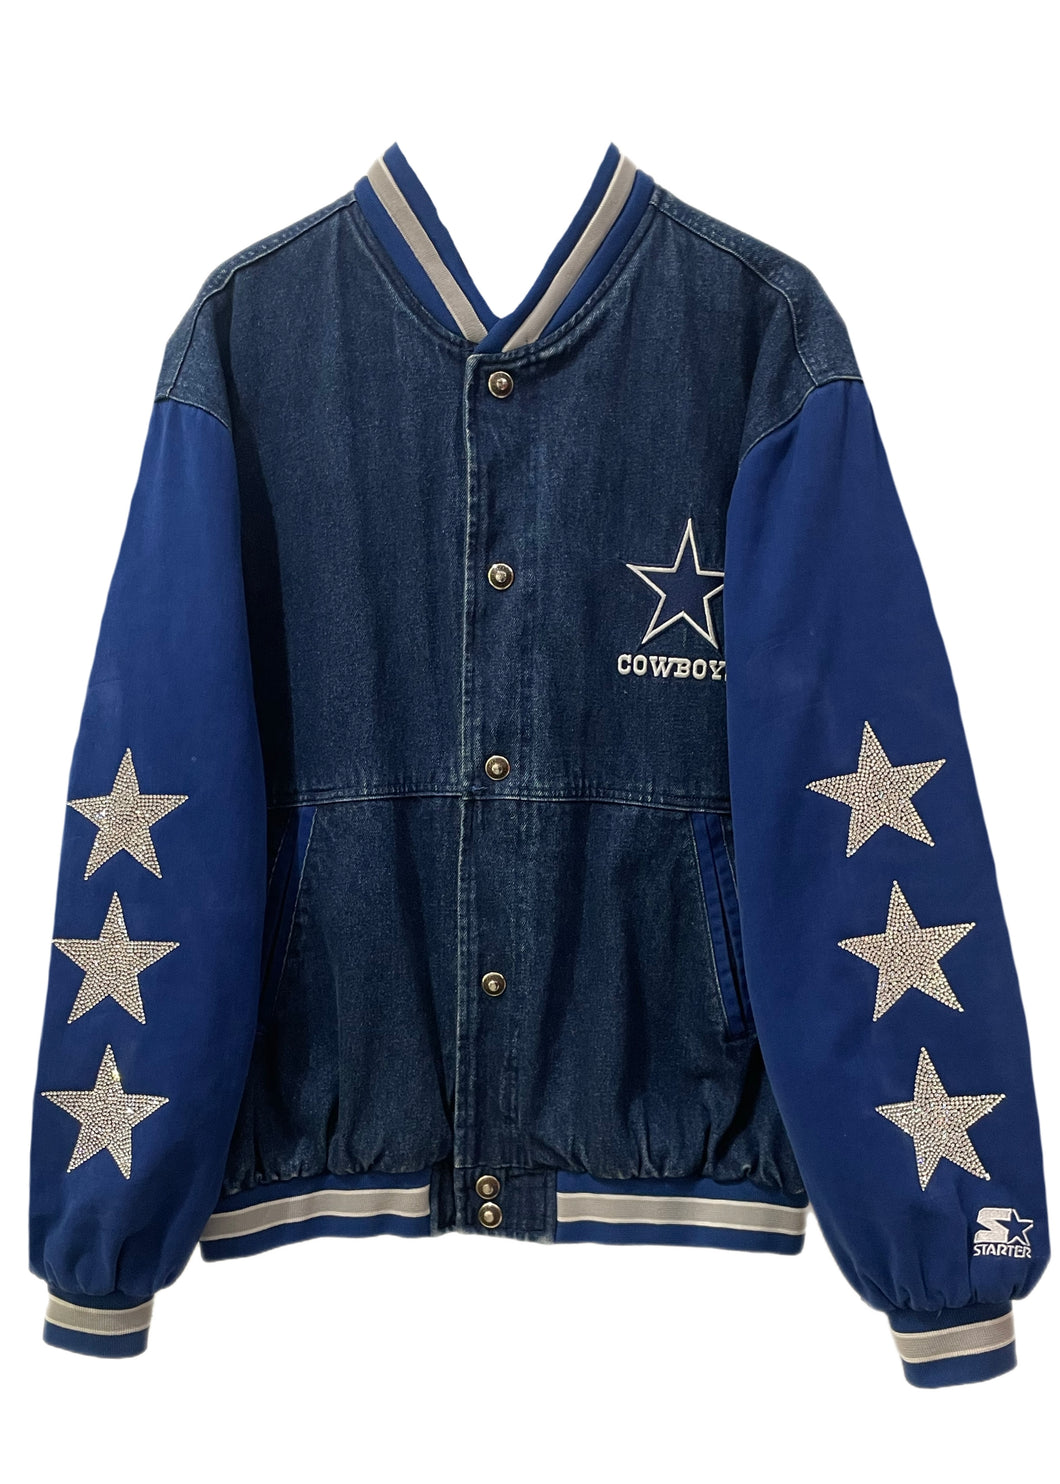 Dallas Cowboys, NFL “Super Rare Find” One of a KIND Vintage Denim Jacket with Three Crystal Star Design.